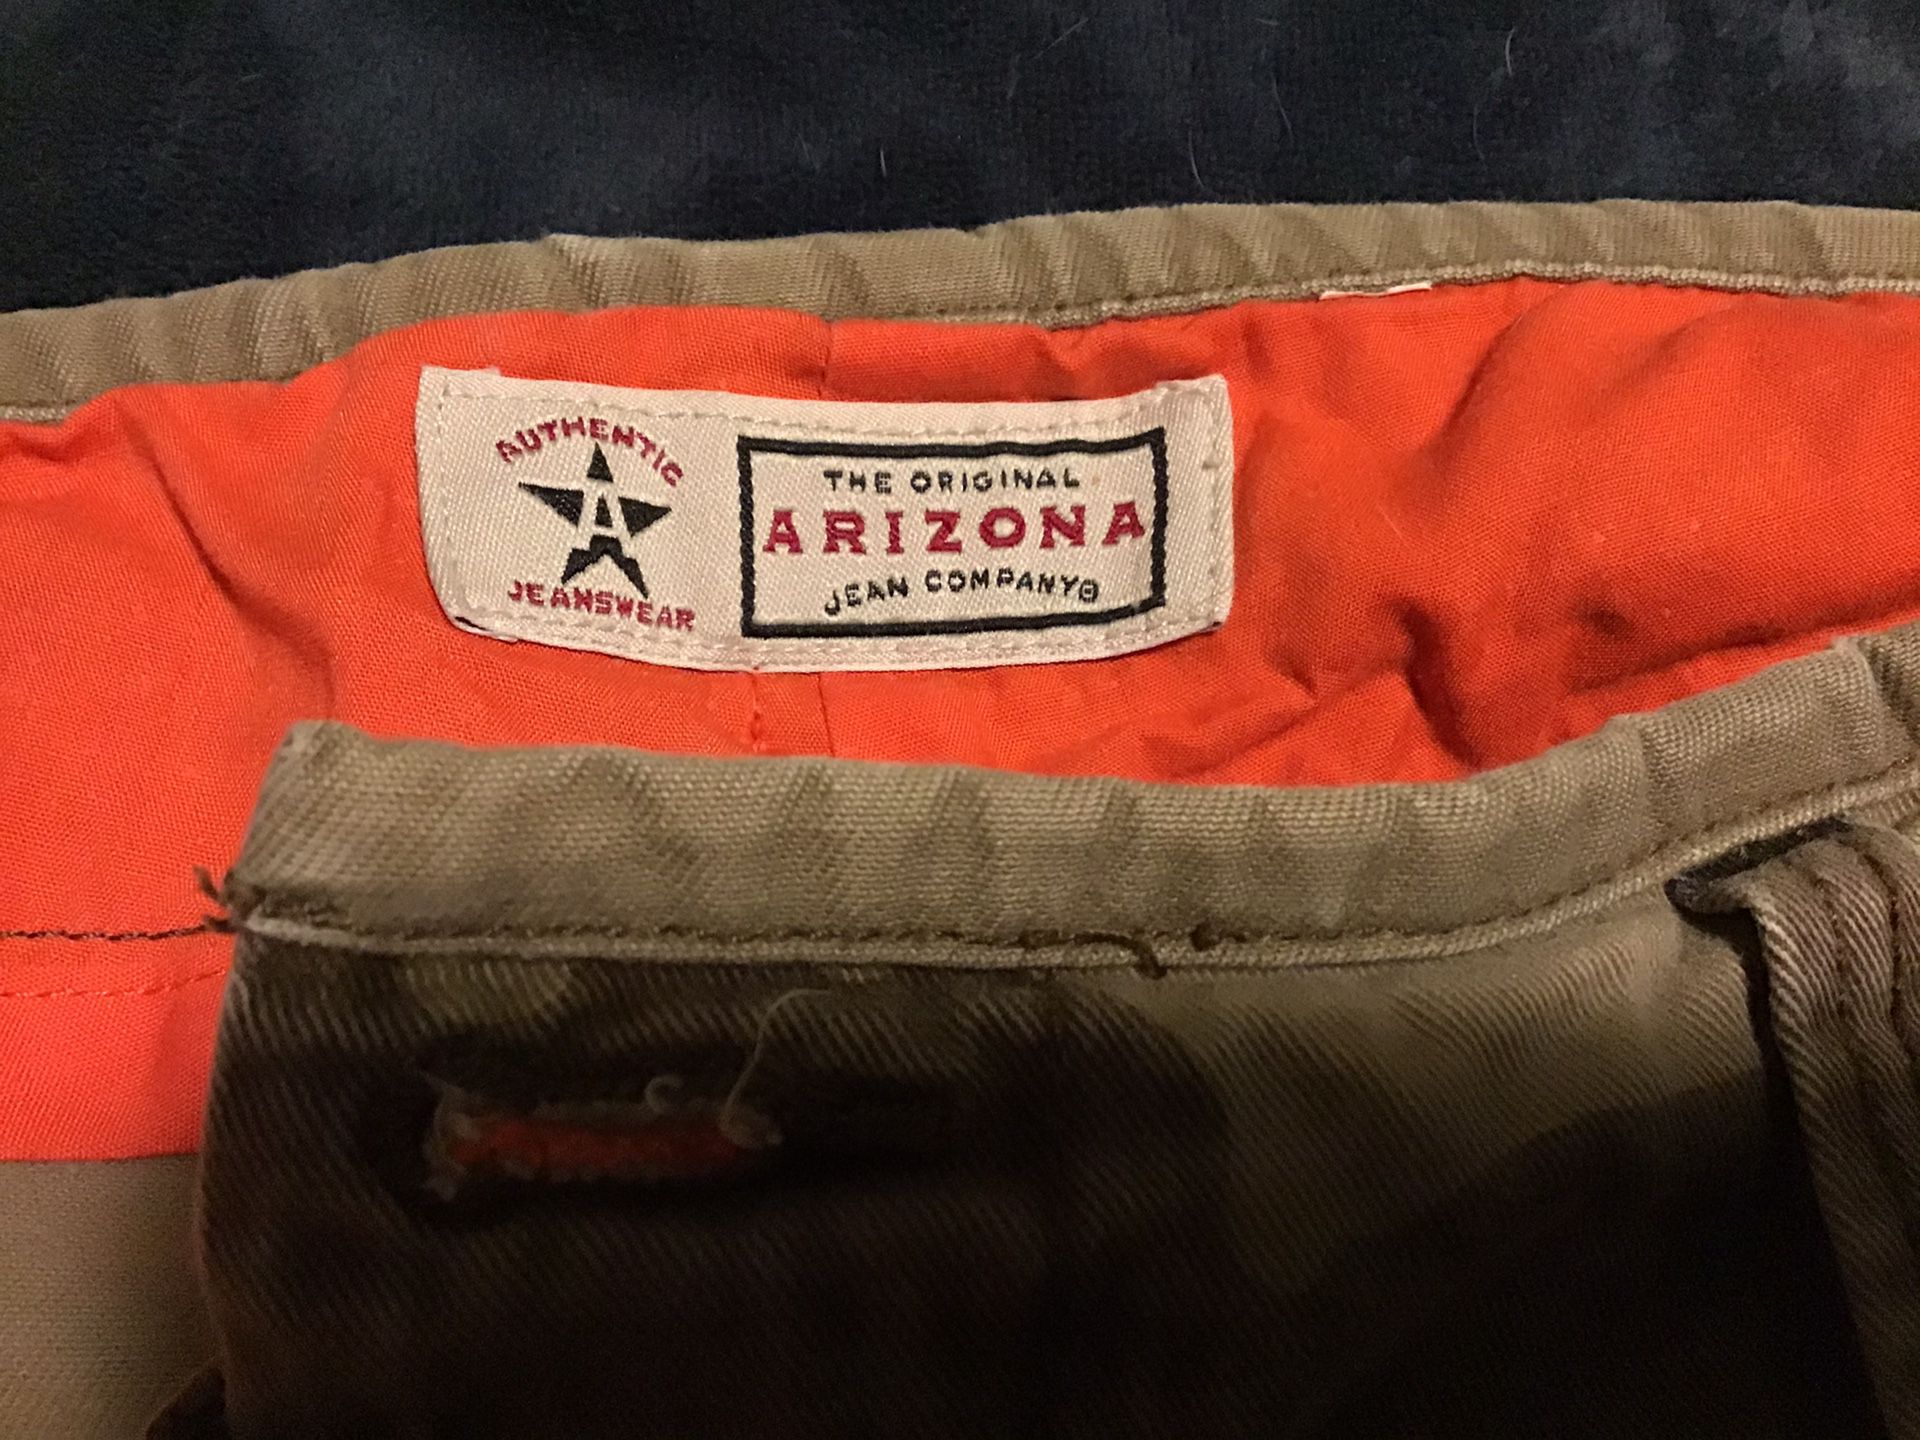 Arizona Jean Co. Desert Camo Cargo Pants